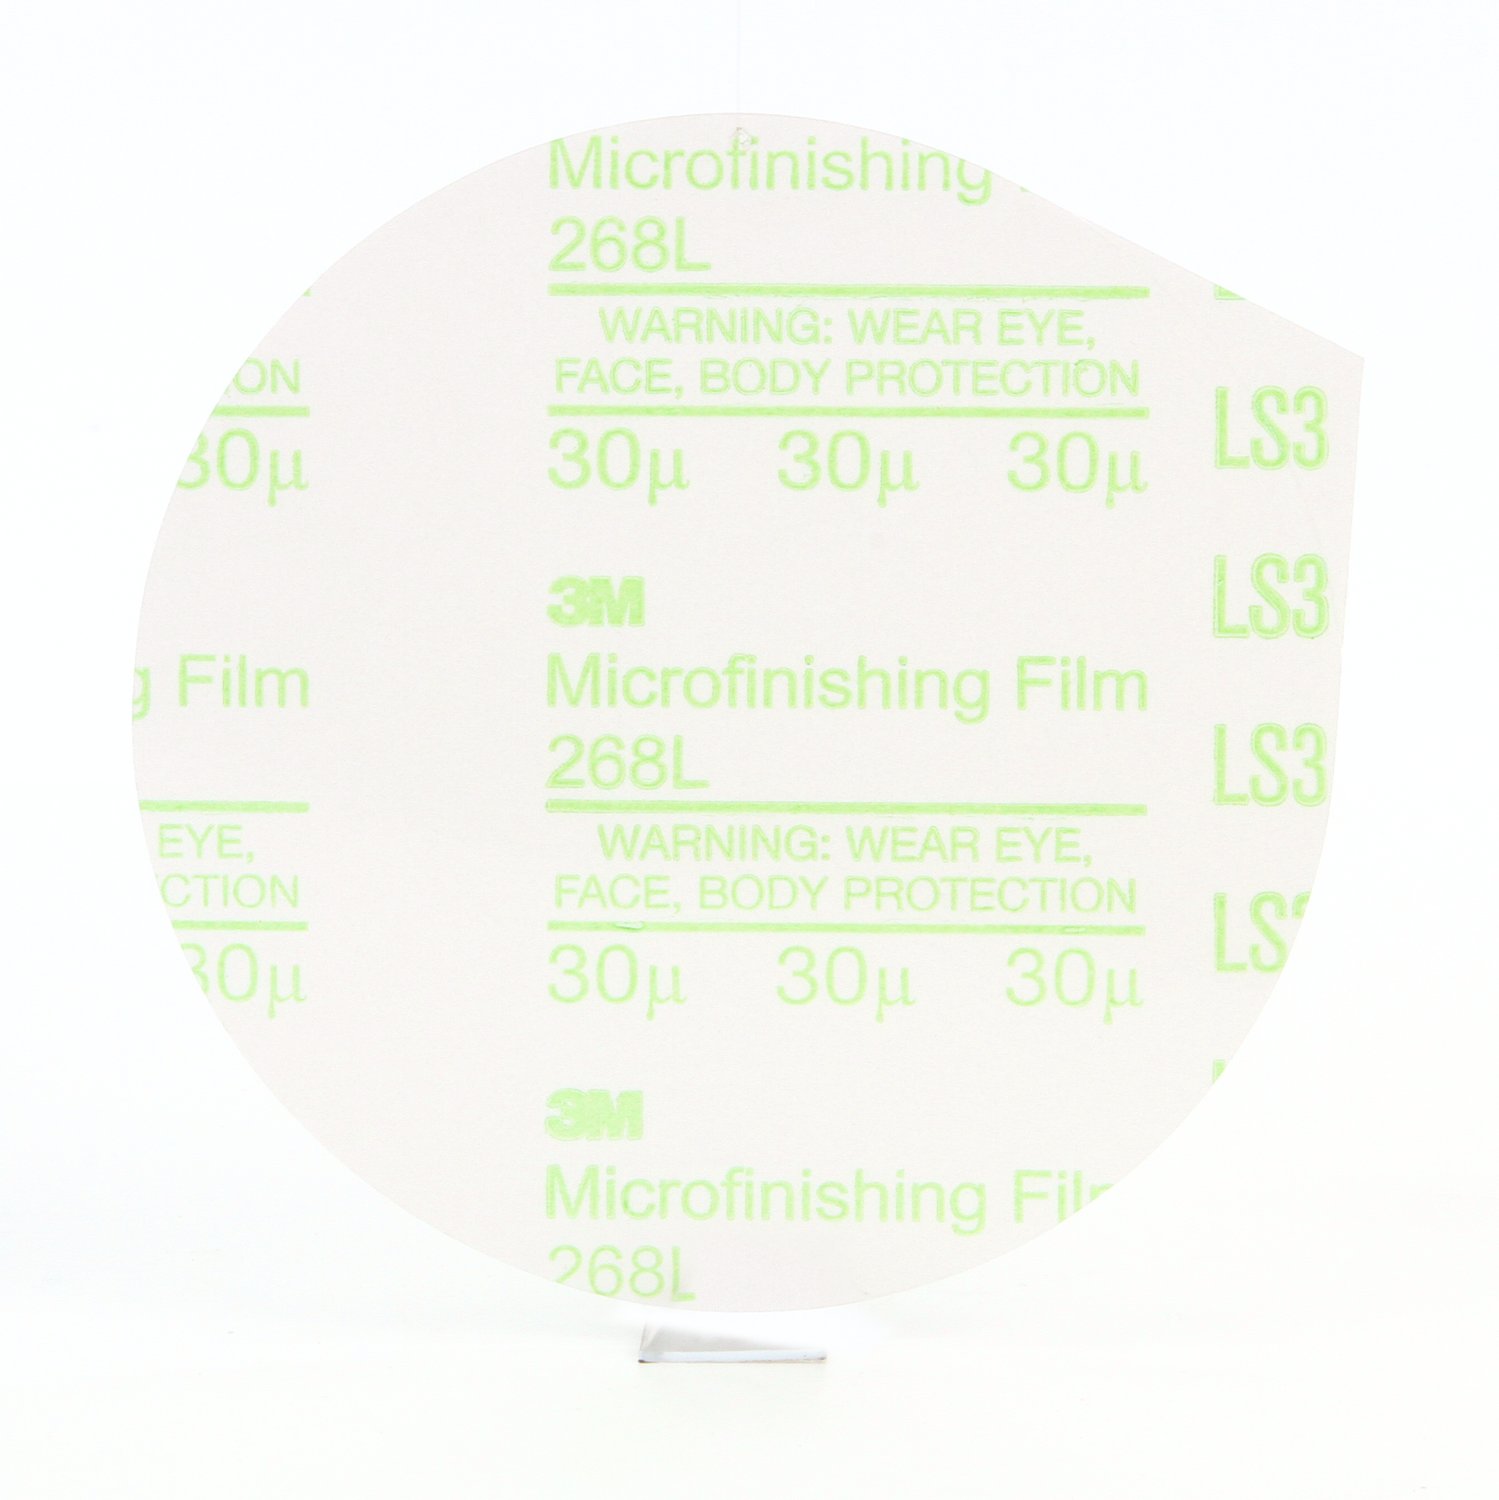 7000118196 - 3M Microfinishing PSA Film Disc 268L, 30 Mic 3MIL, Type D, 5 in x NH,
Die 500X, 25/Bag, 500 ea/Case